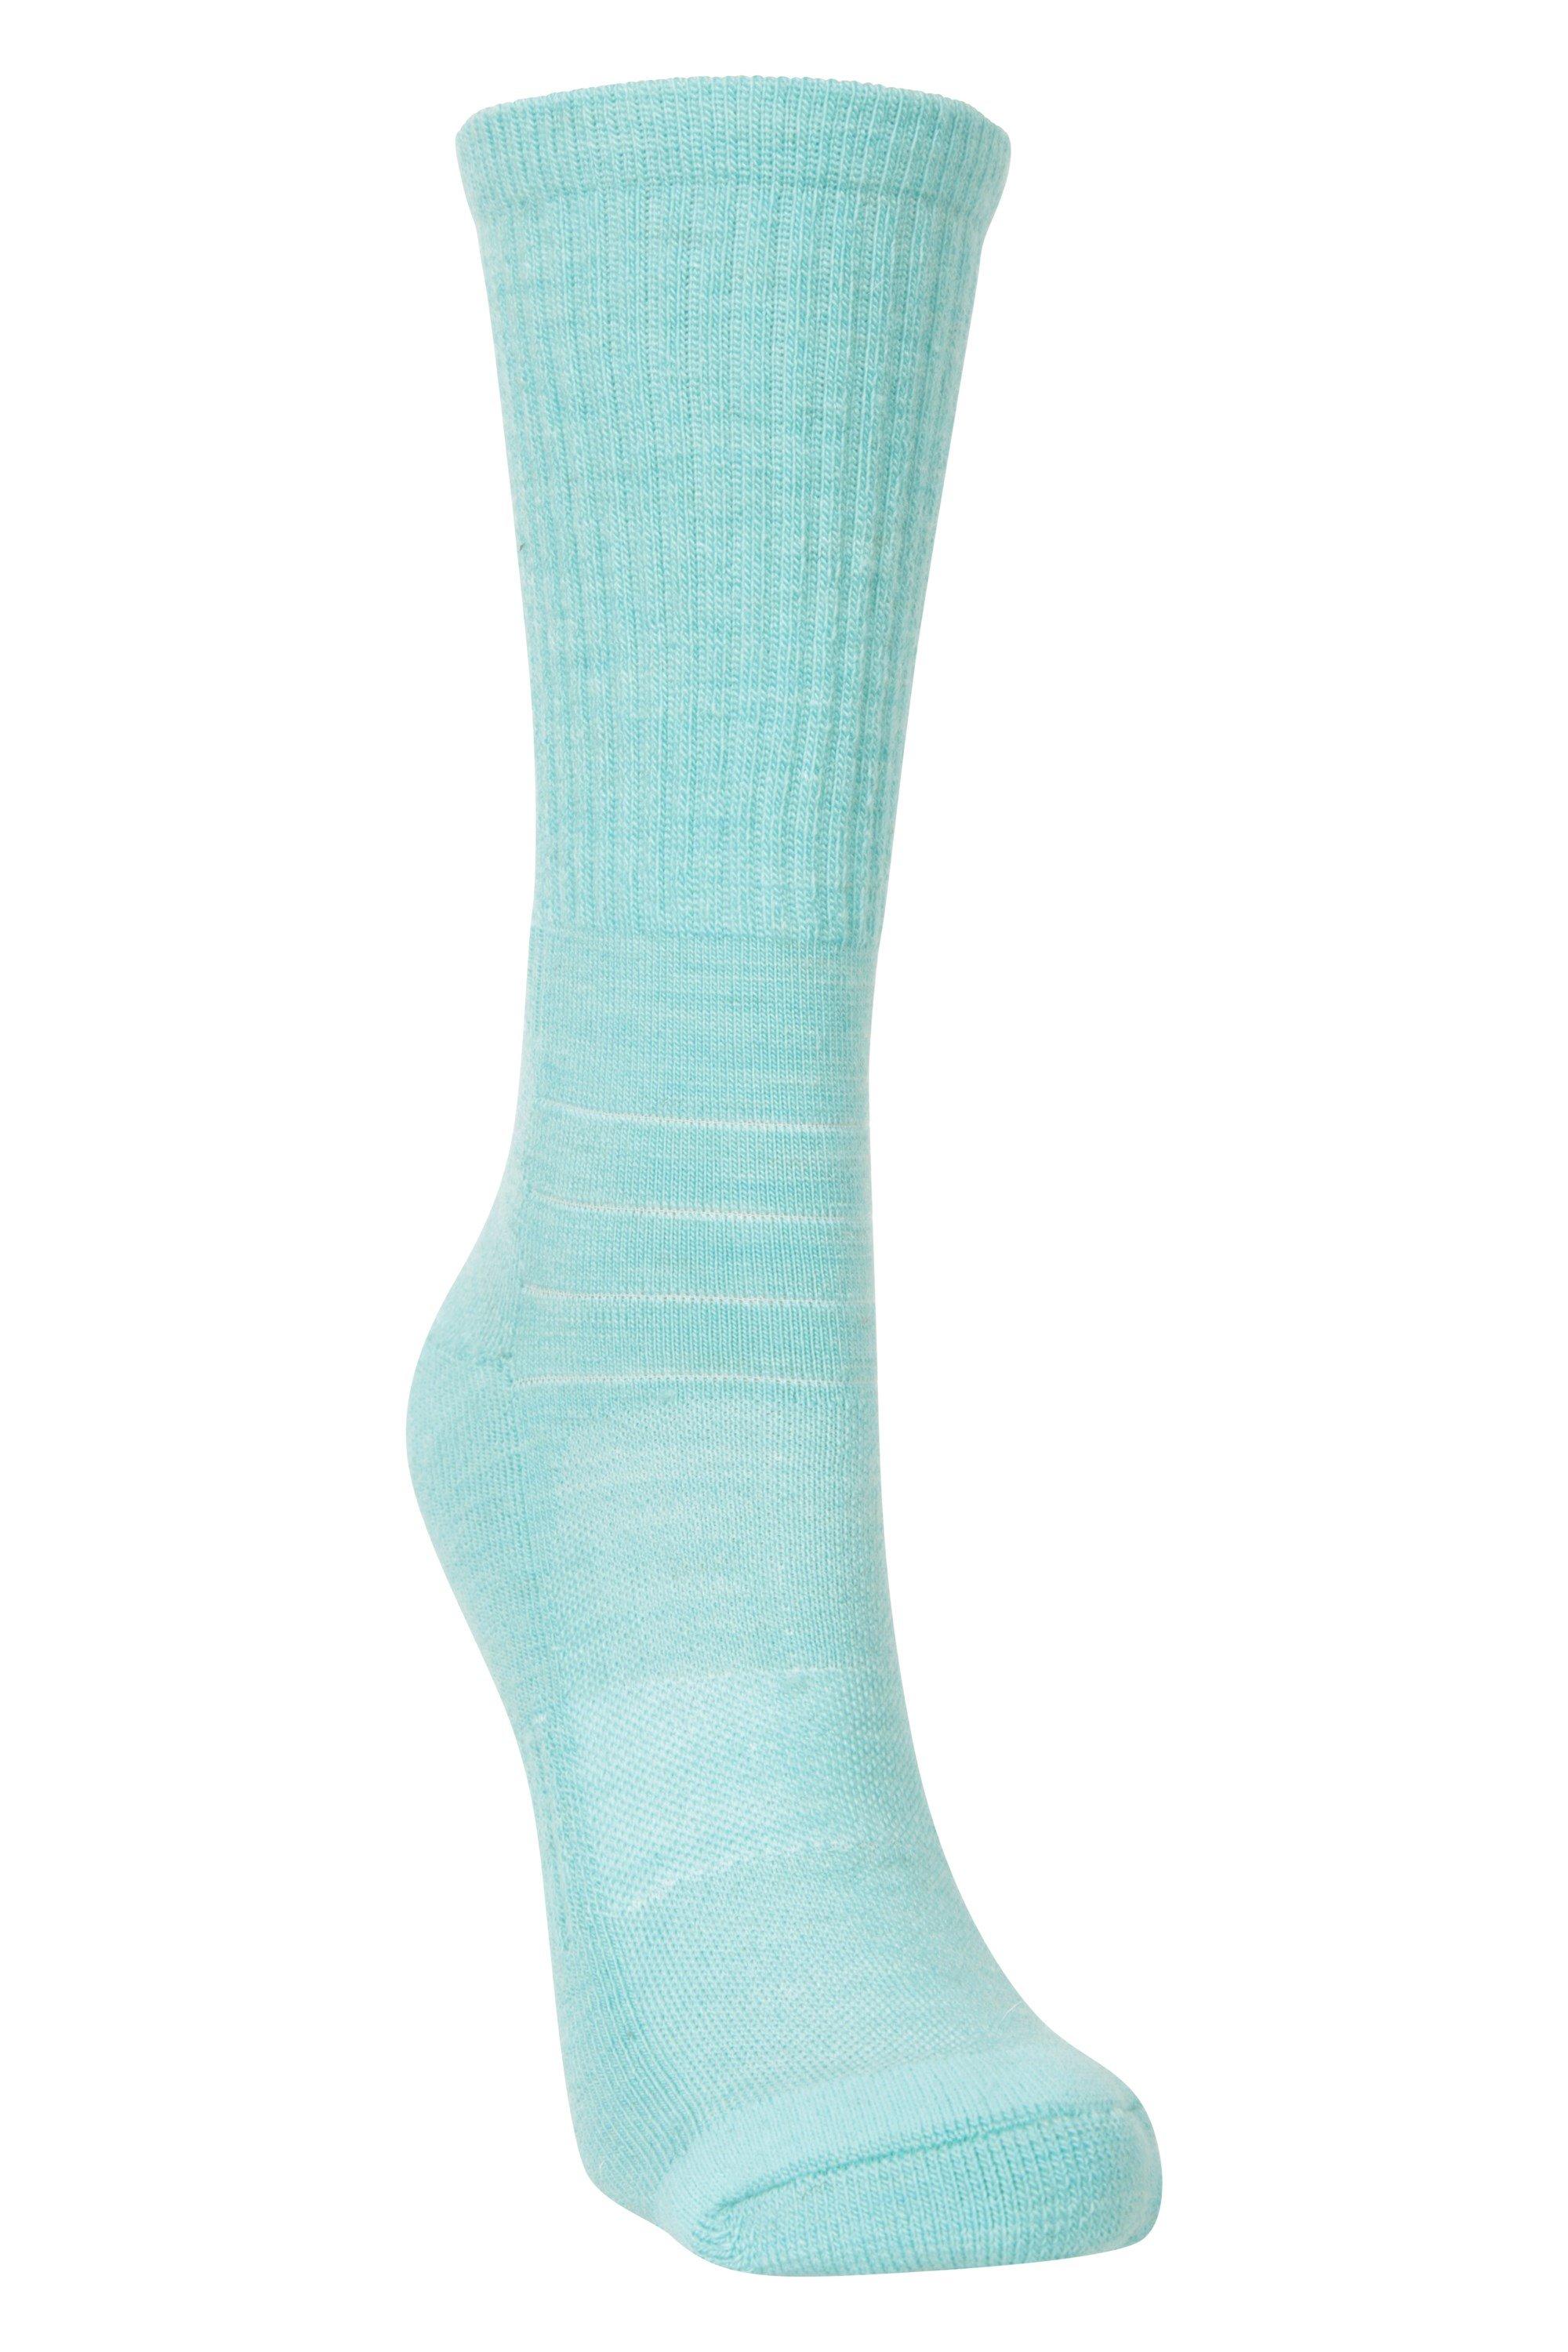 Merino Socks Breathable Everyday Comfy  Footwear